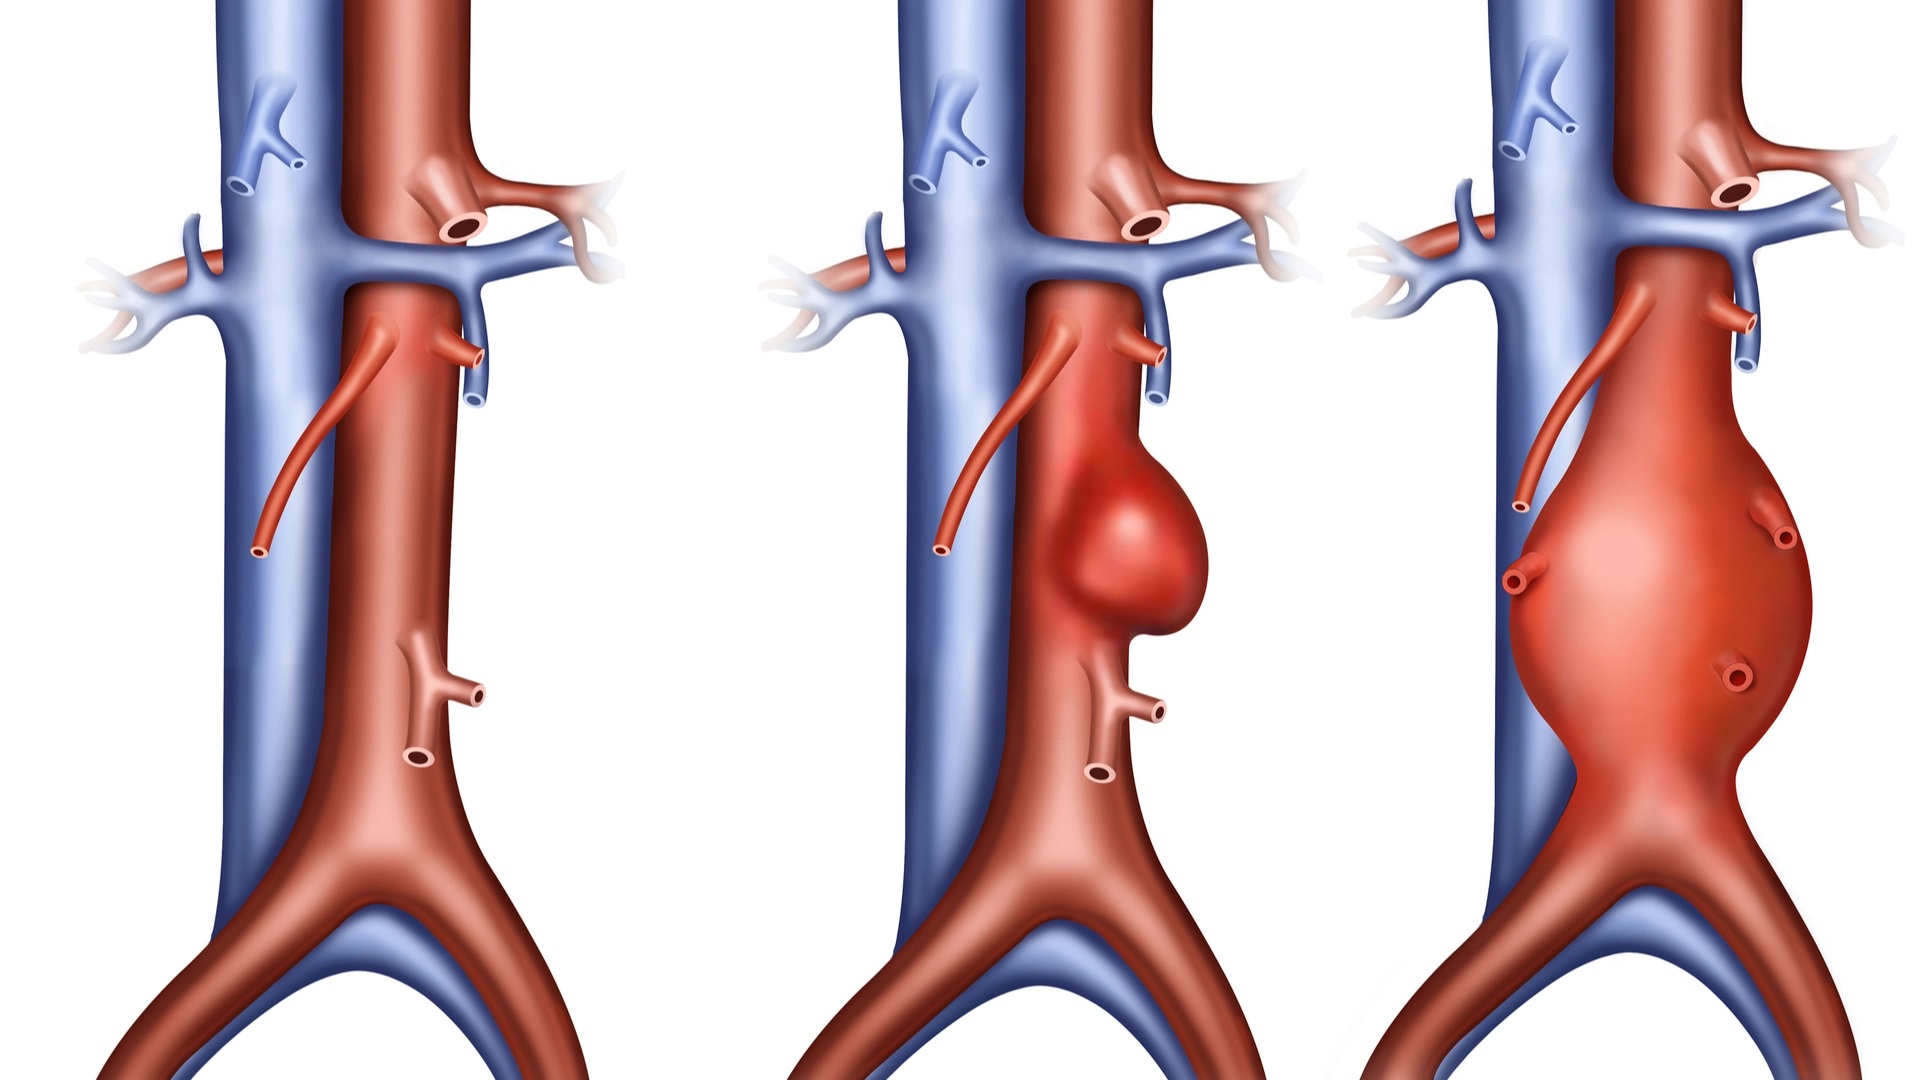 Disectia de aorta poate sa fie vindecata cu tratament medicamentos sau in varianta chirurgicala